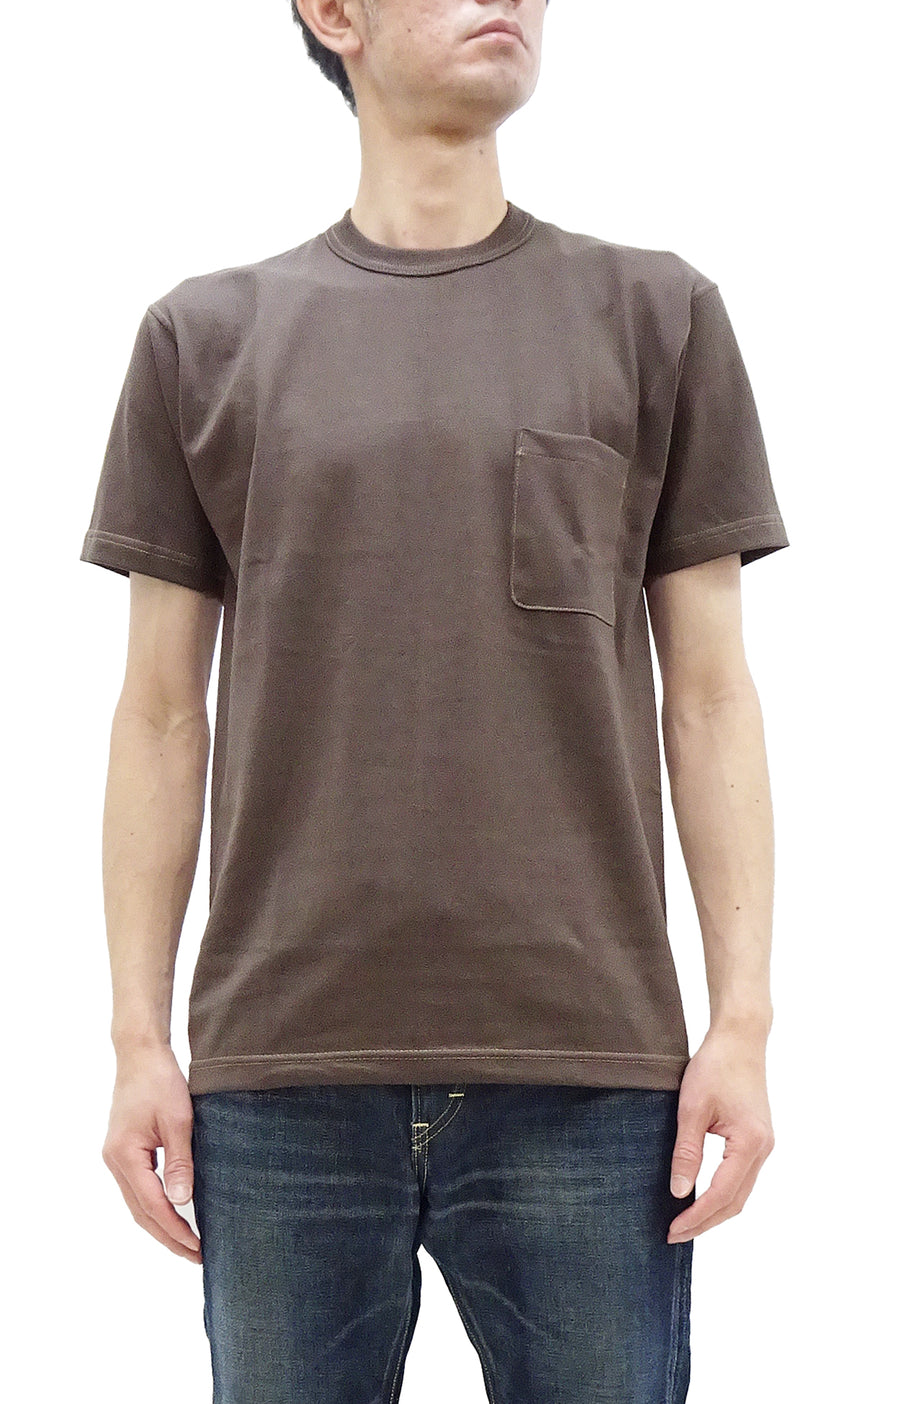 TOYS McCOY T-shirt Men's Steve McQueen Plain Pocket T-Shirt Short Sleeve Loopwheeled Tee TMC2410 021 Faded-DarK-Charcoal